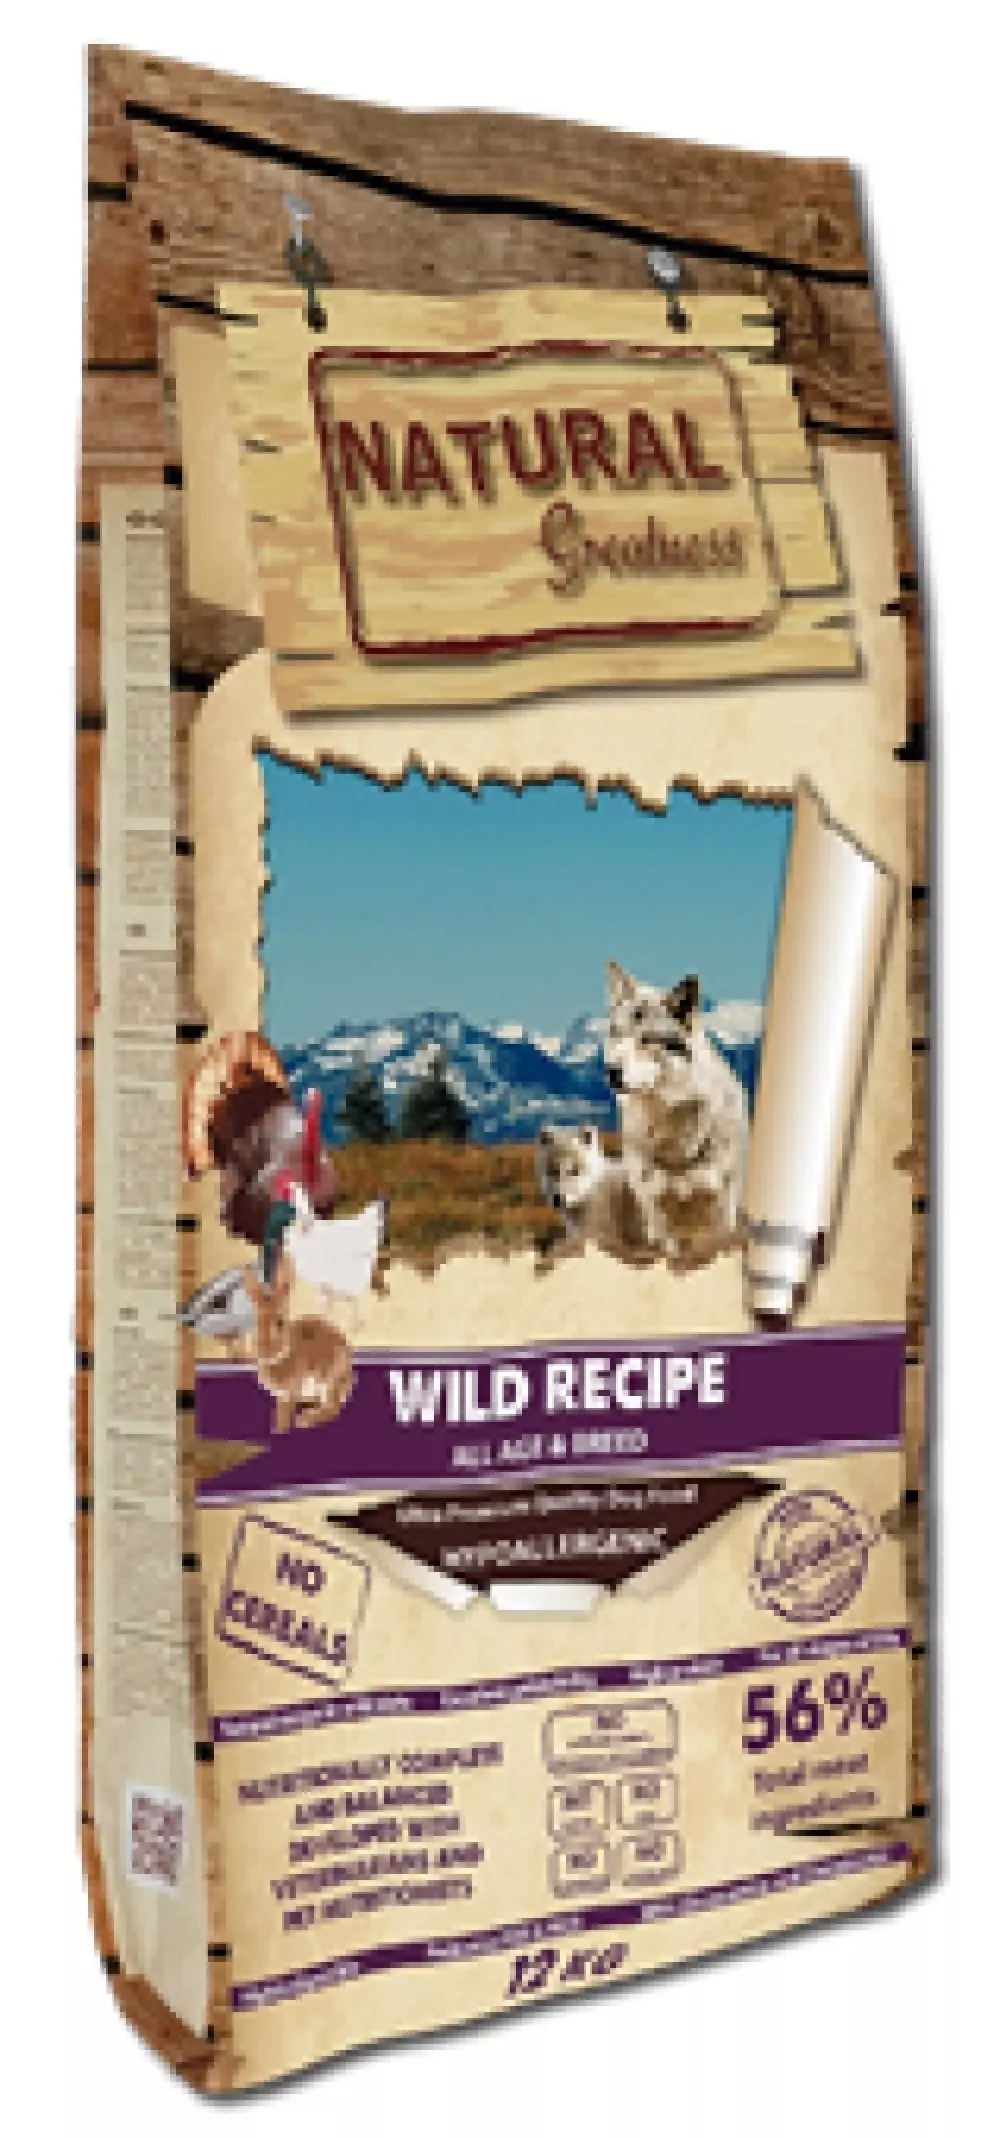 Natural Greatness, Wild Recipe, 2 kg, 8425402399996, Hundemat, Natural Greatness, Arctic Pets AS, Wild Recipe